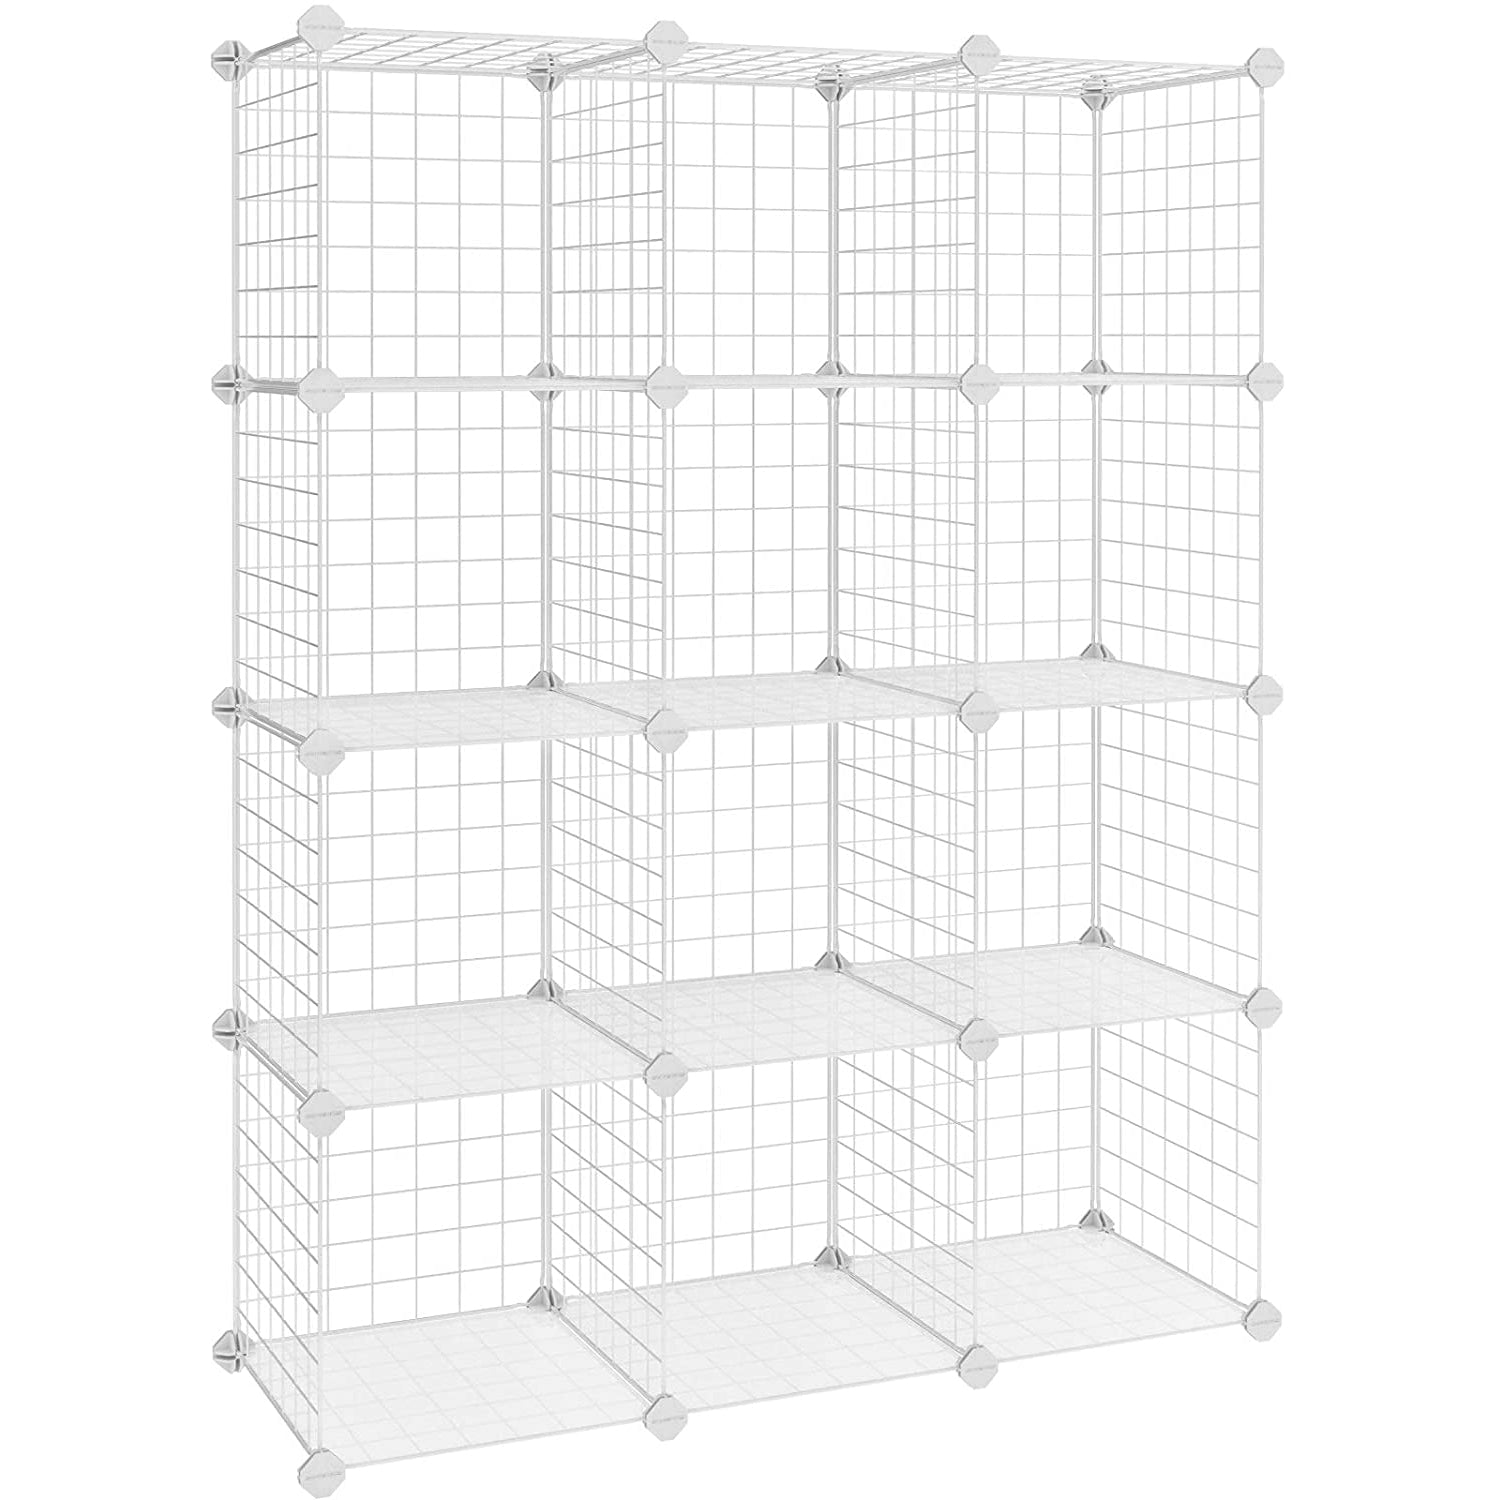 Nancy's Chelan Storage Rack - Shoe Rack - Shelving System - 12 Compartments - Storage Cabinet - Boltless Racks - 93 x 31 x 123 cm - White